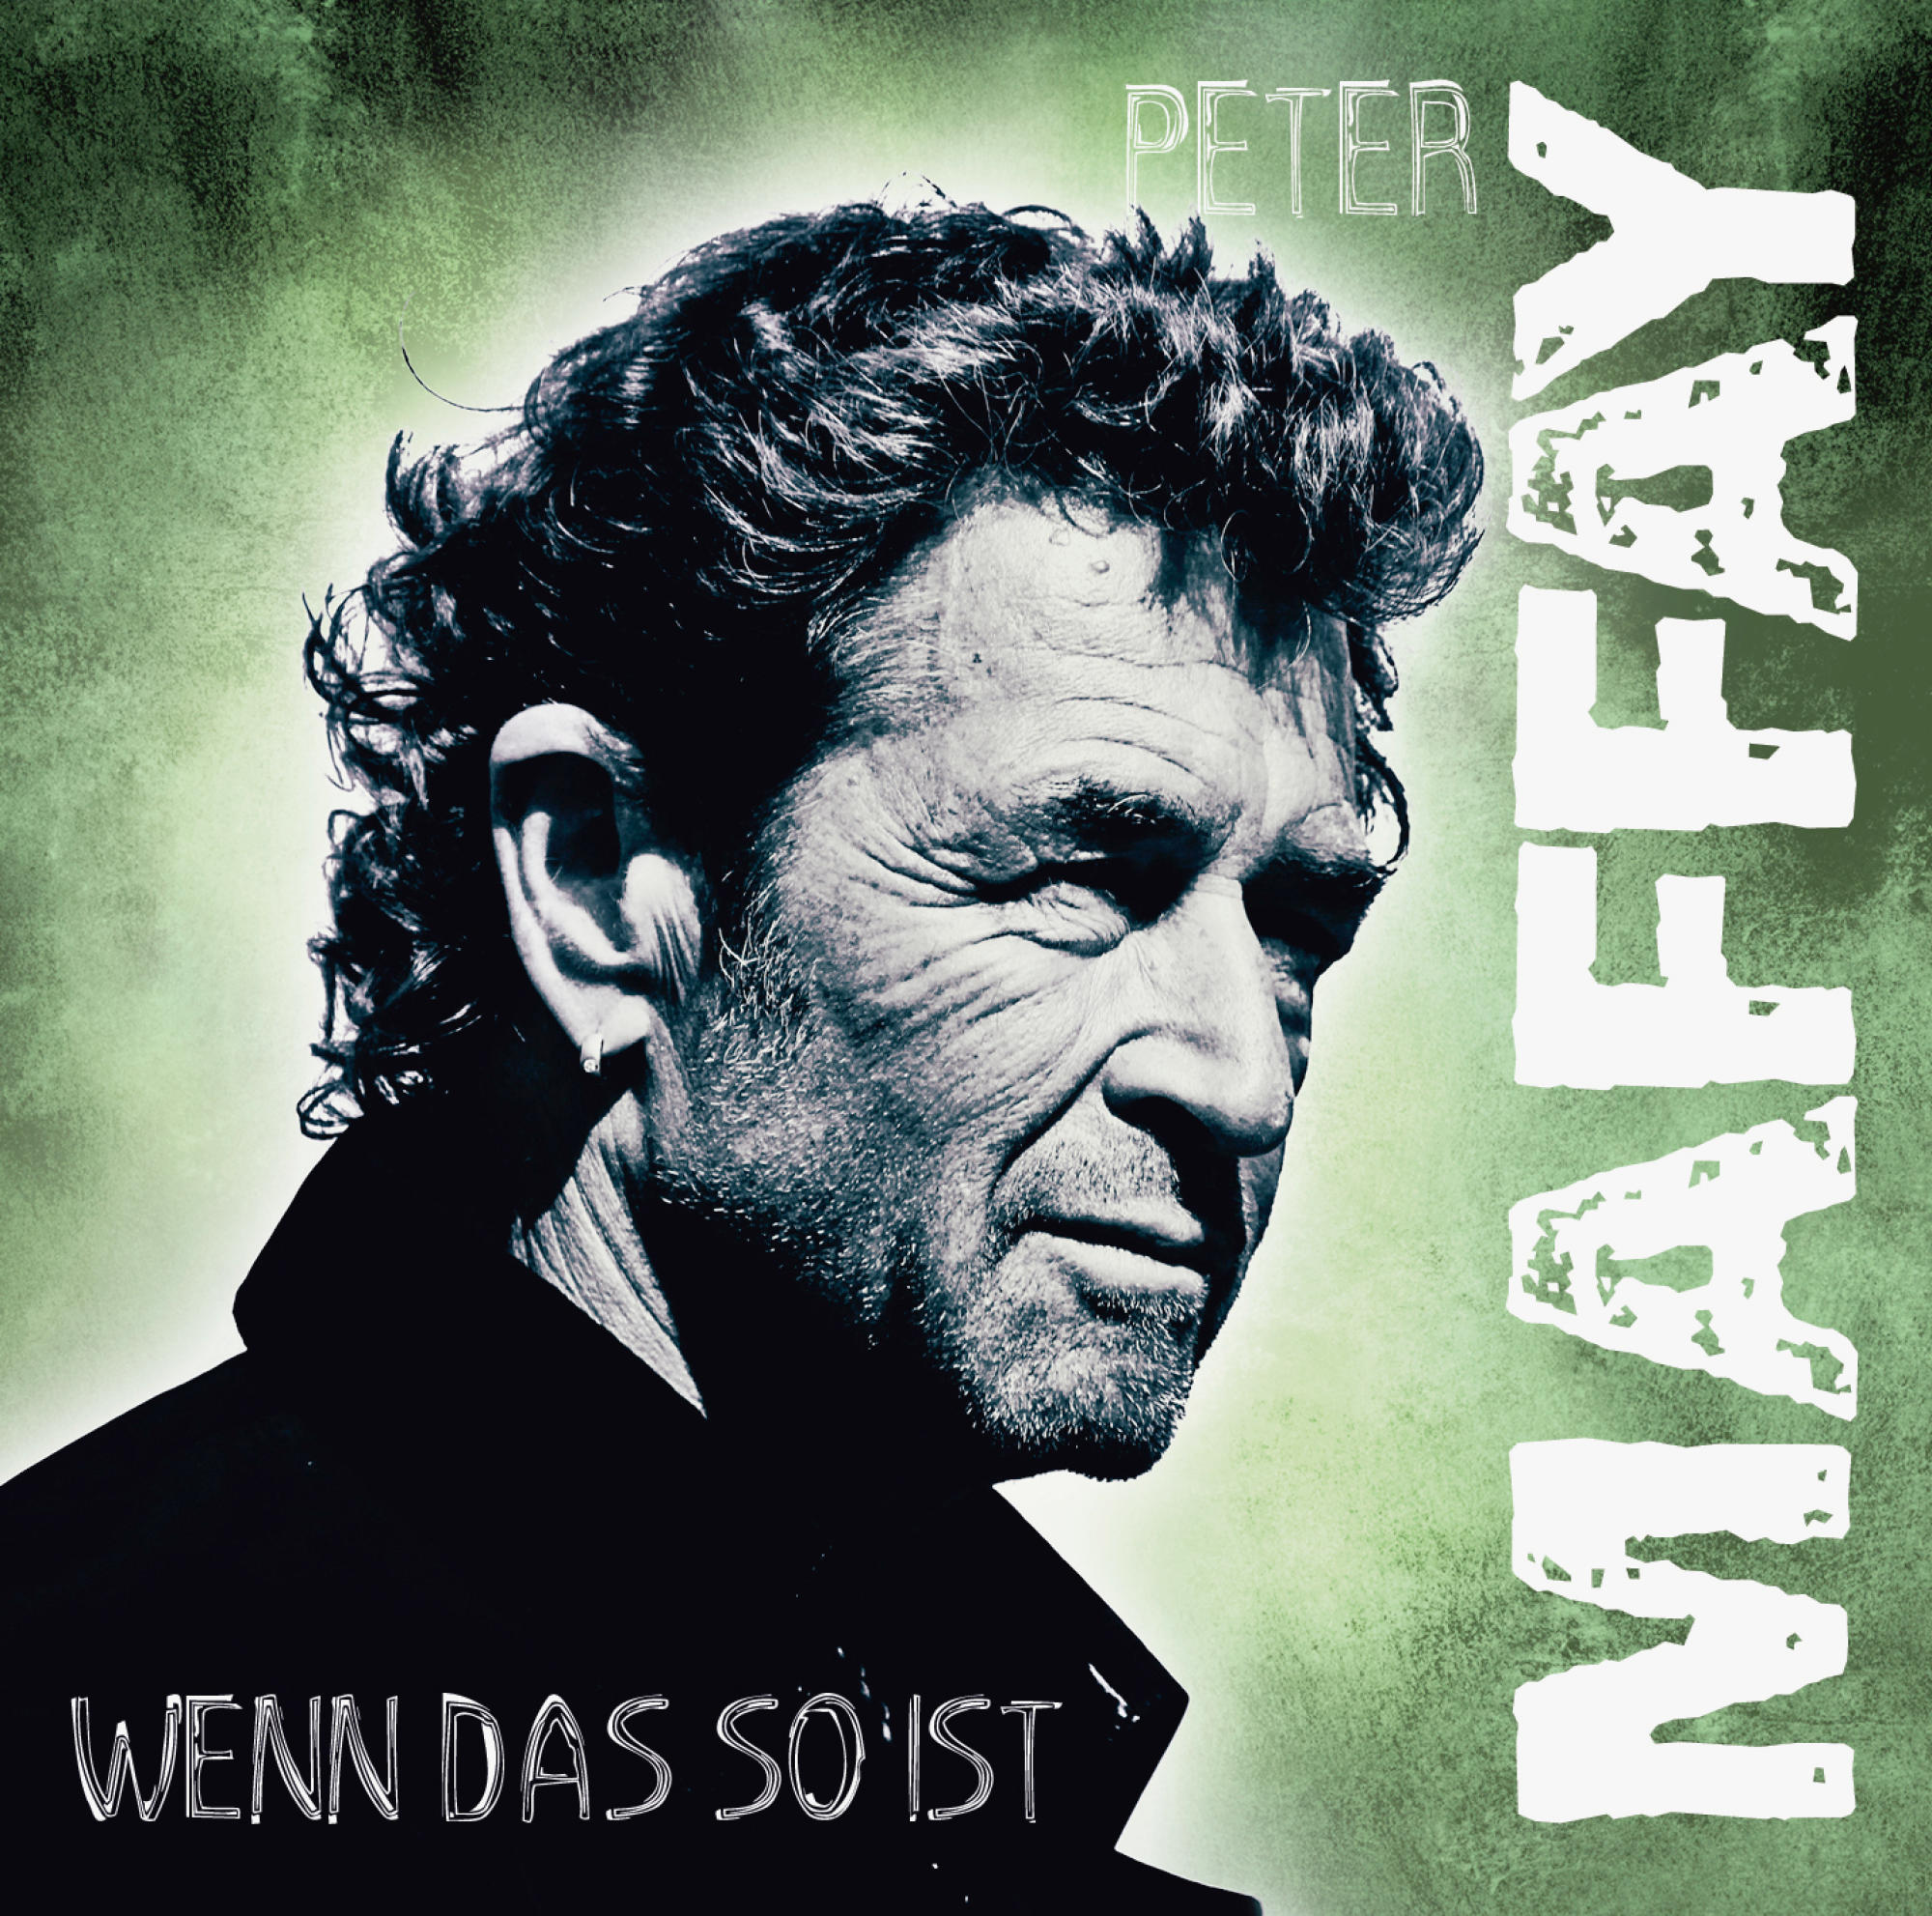 Peter Maffay (CD) Wenn - - ist so das